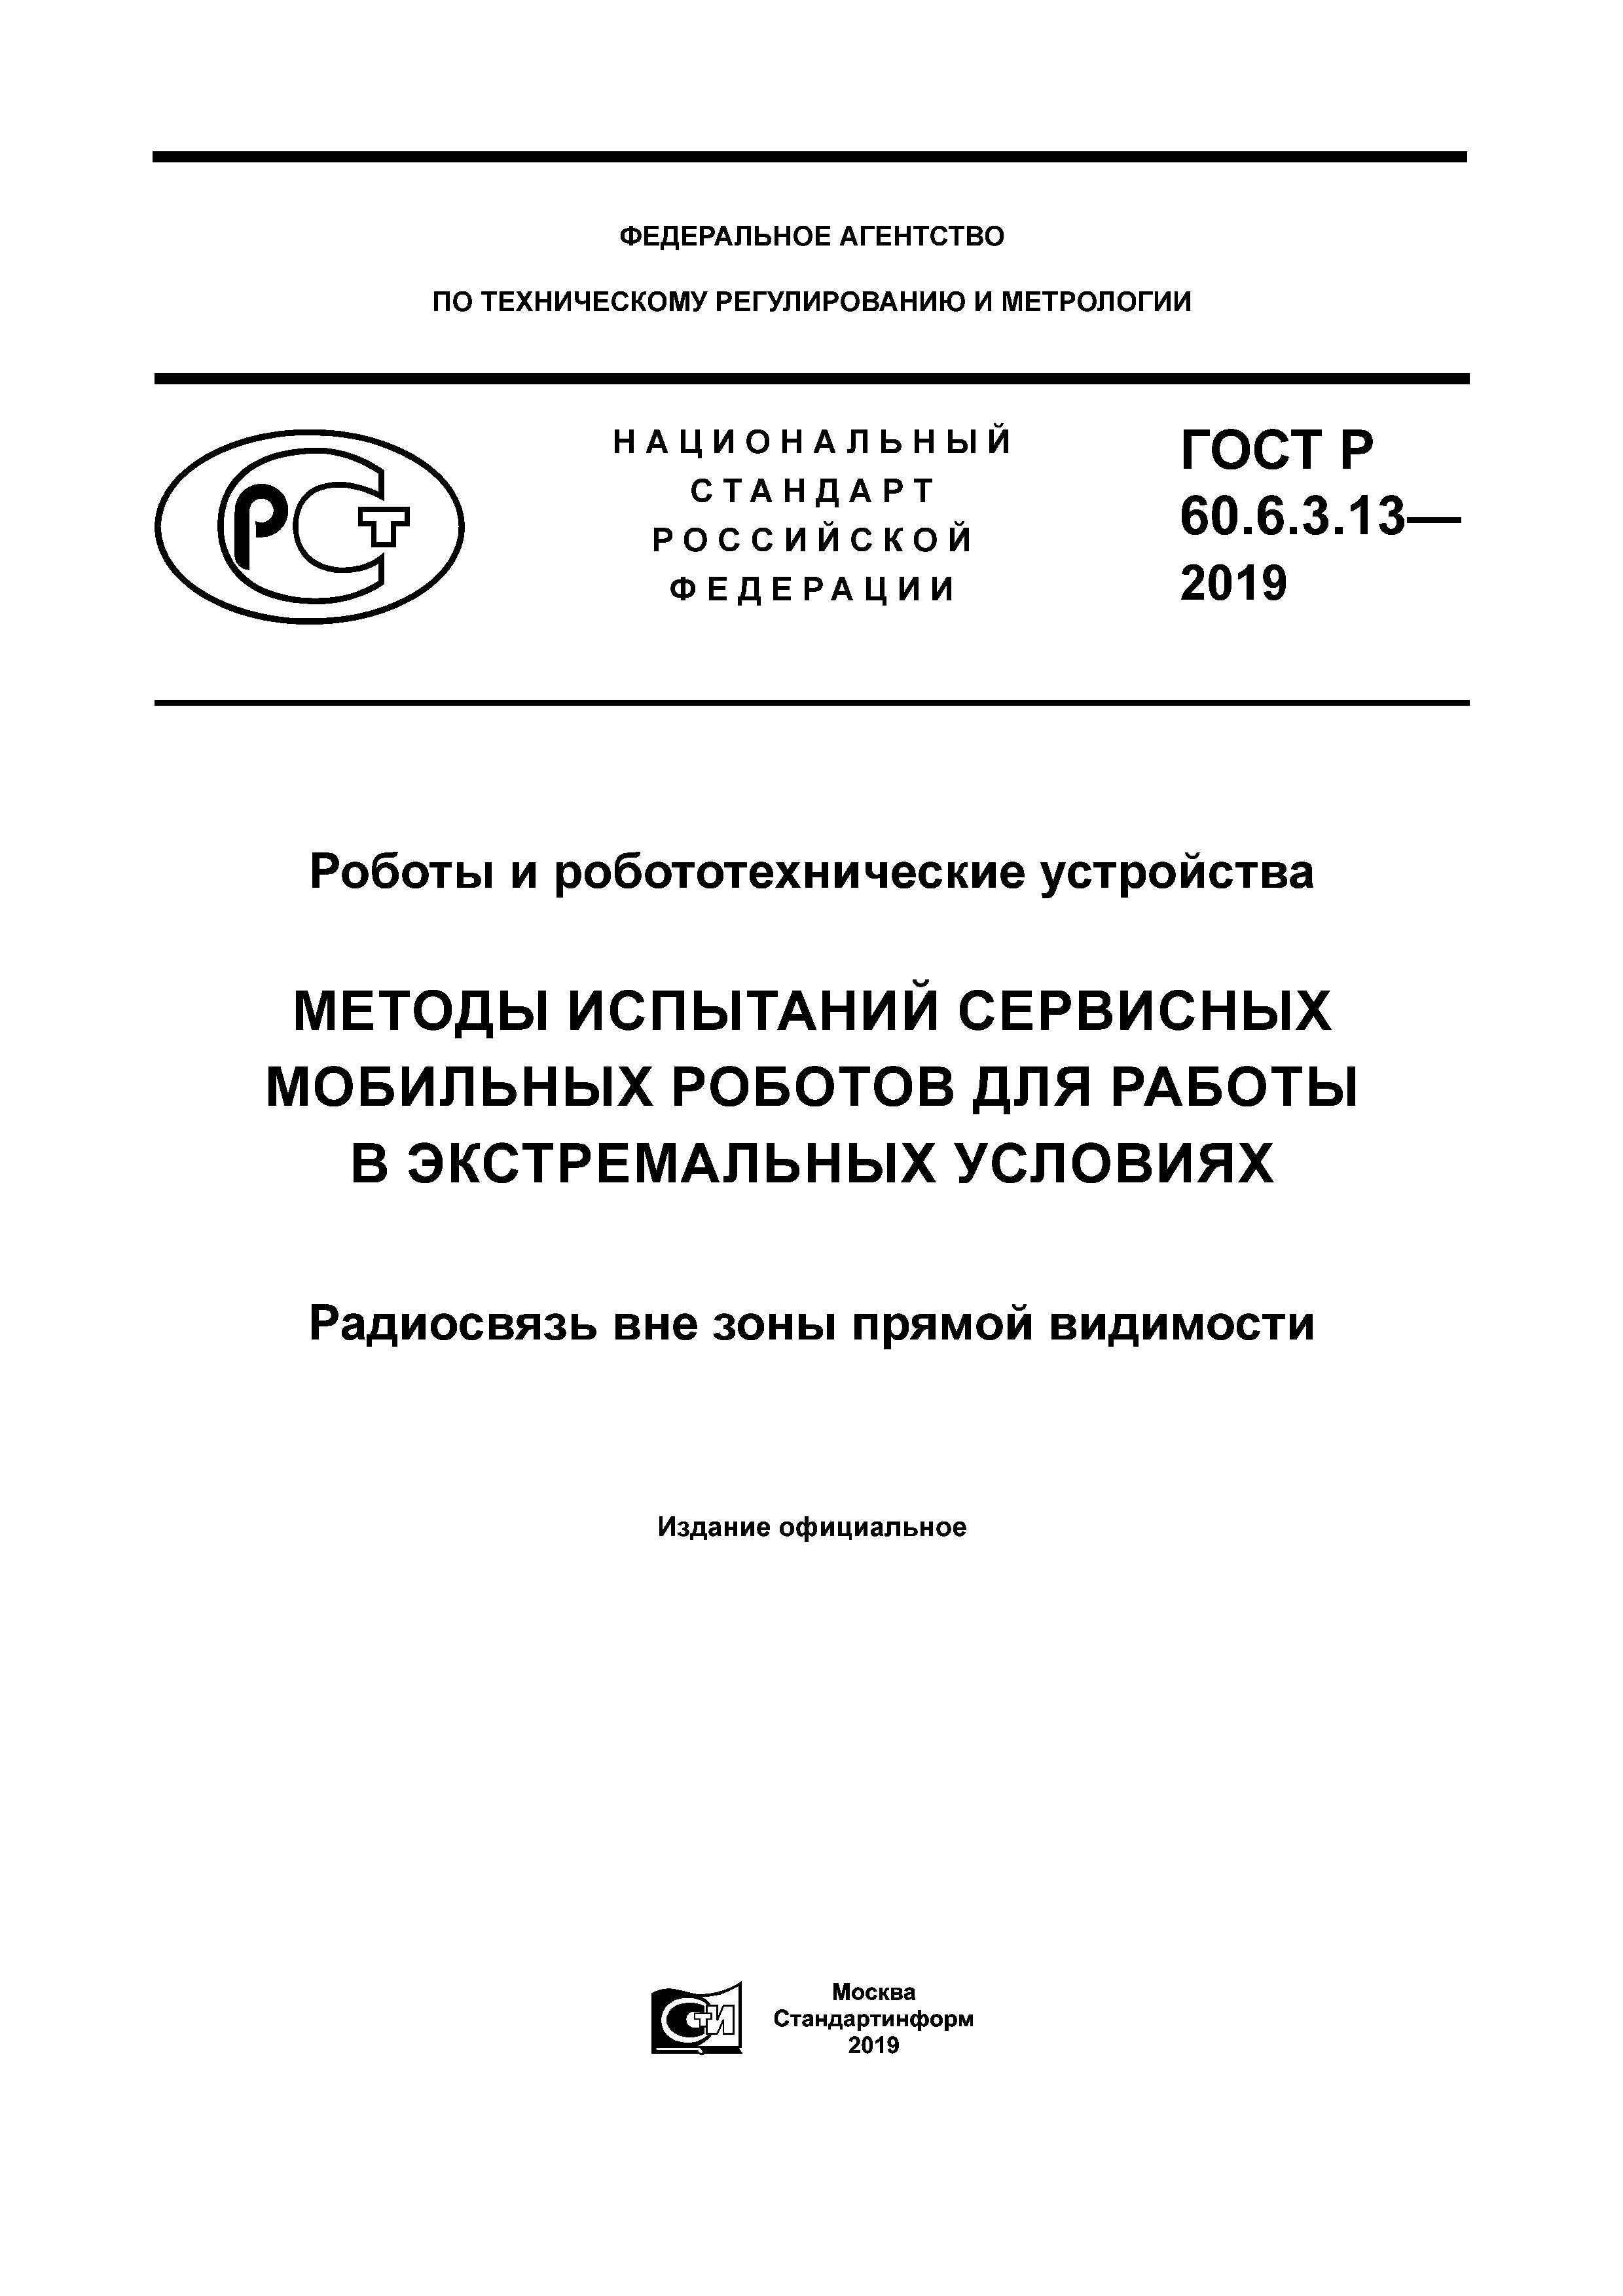 ГОСТ Р 60.6.3.13-2019